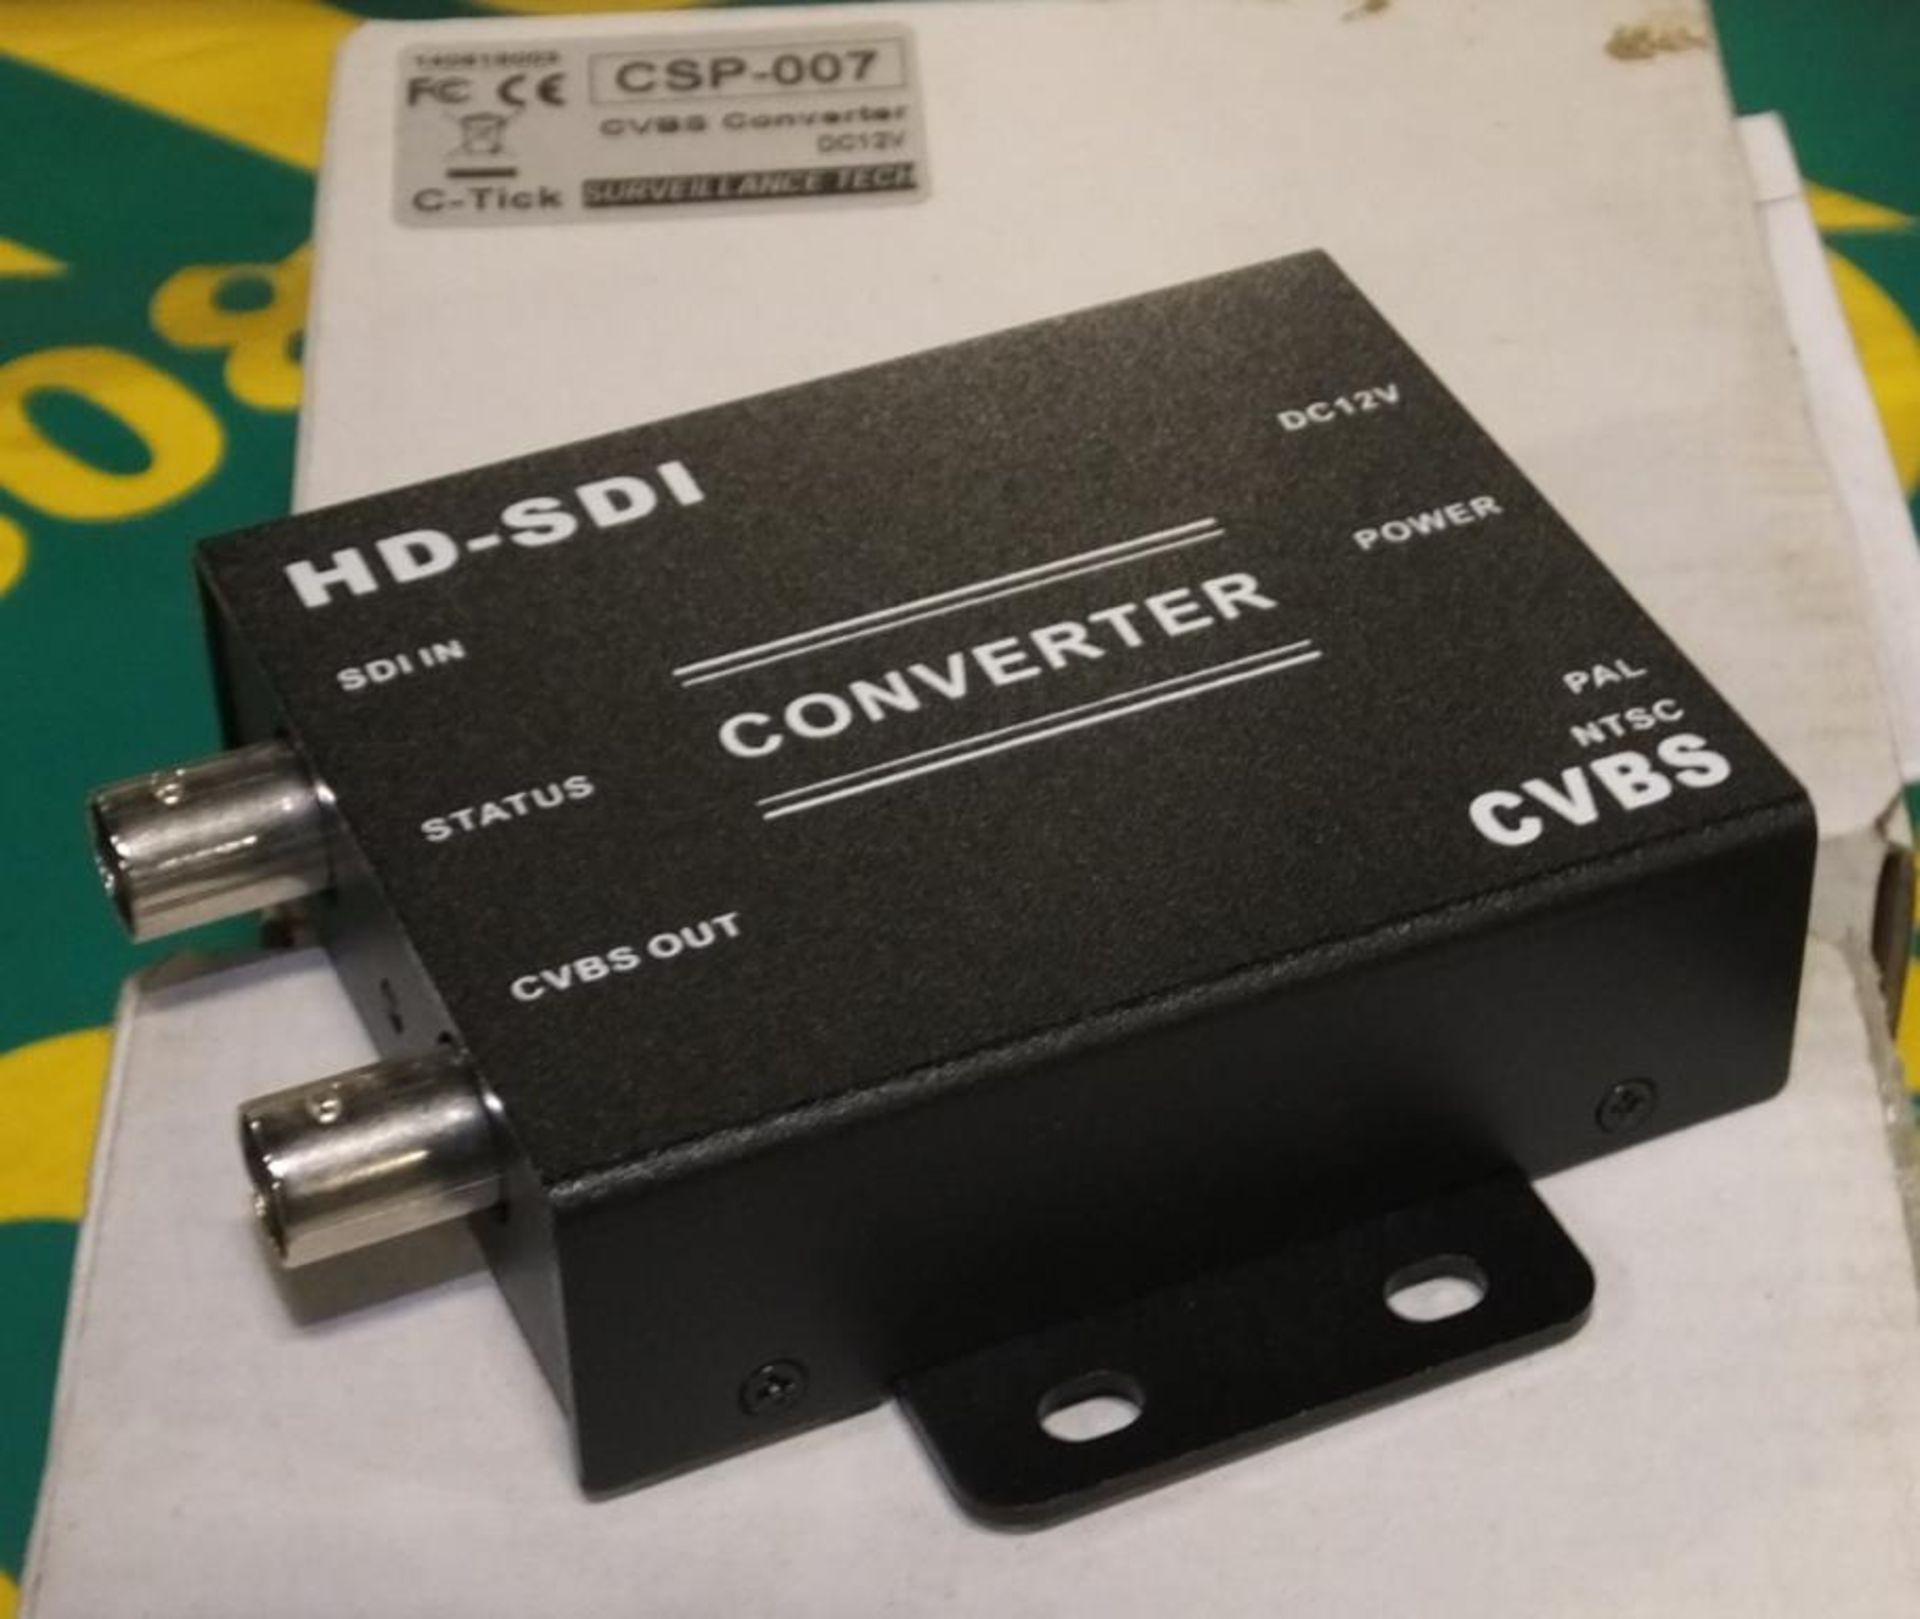 4x 3G-SDI CVBS Converters. - Image 2 of 2